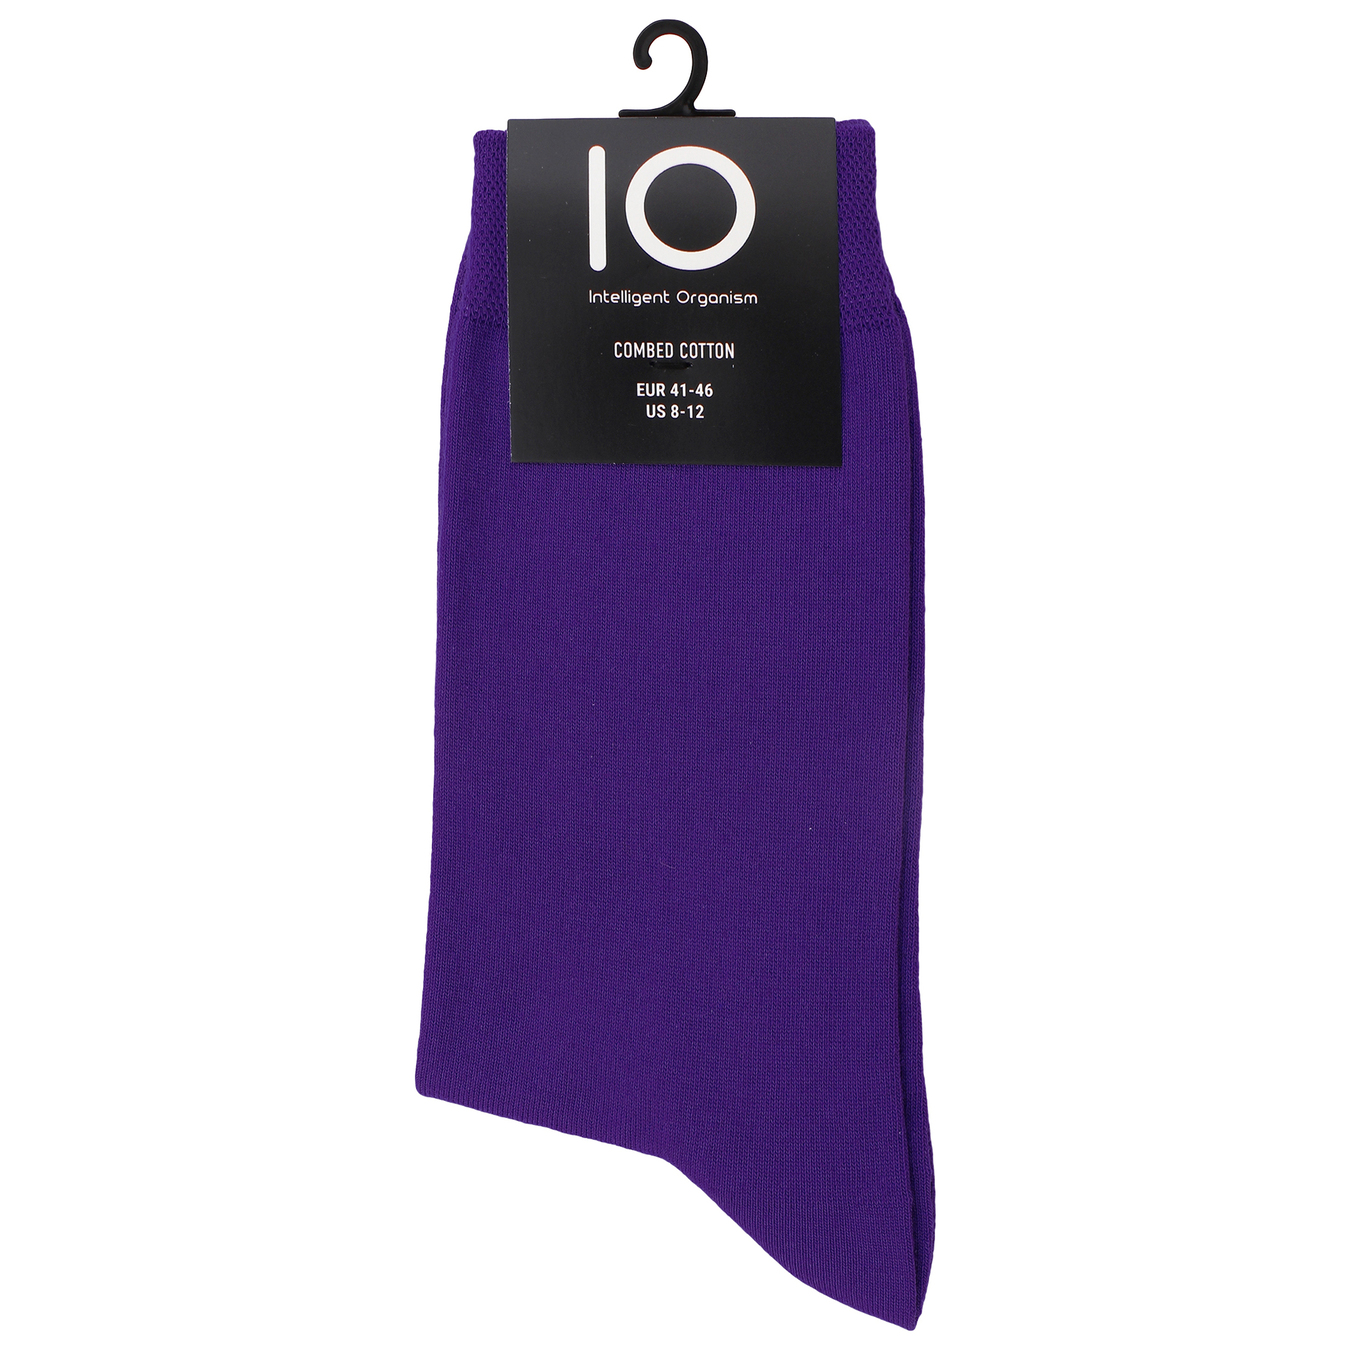 IO socks for men, dark purple, 41-46 years old.